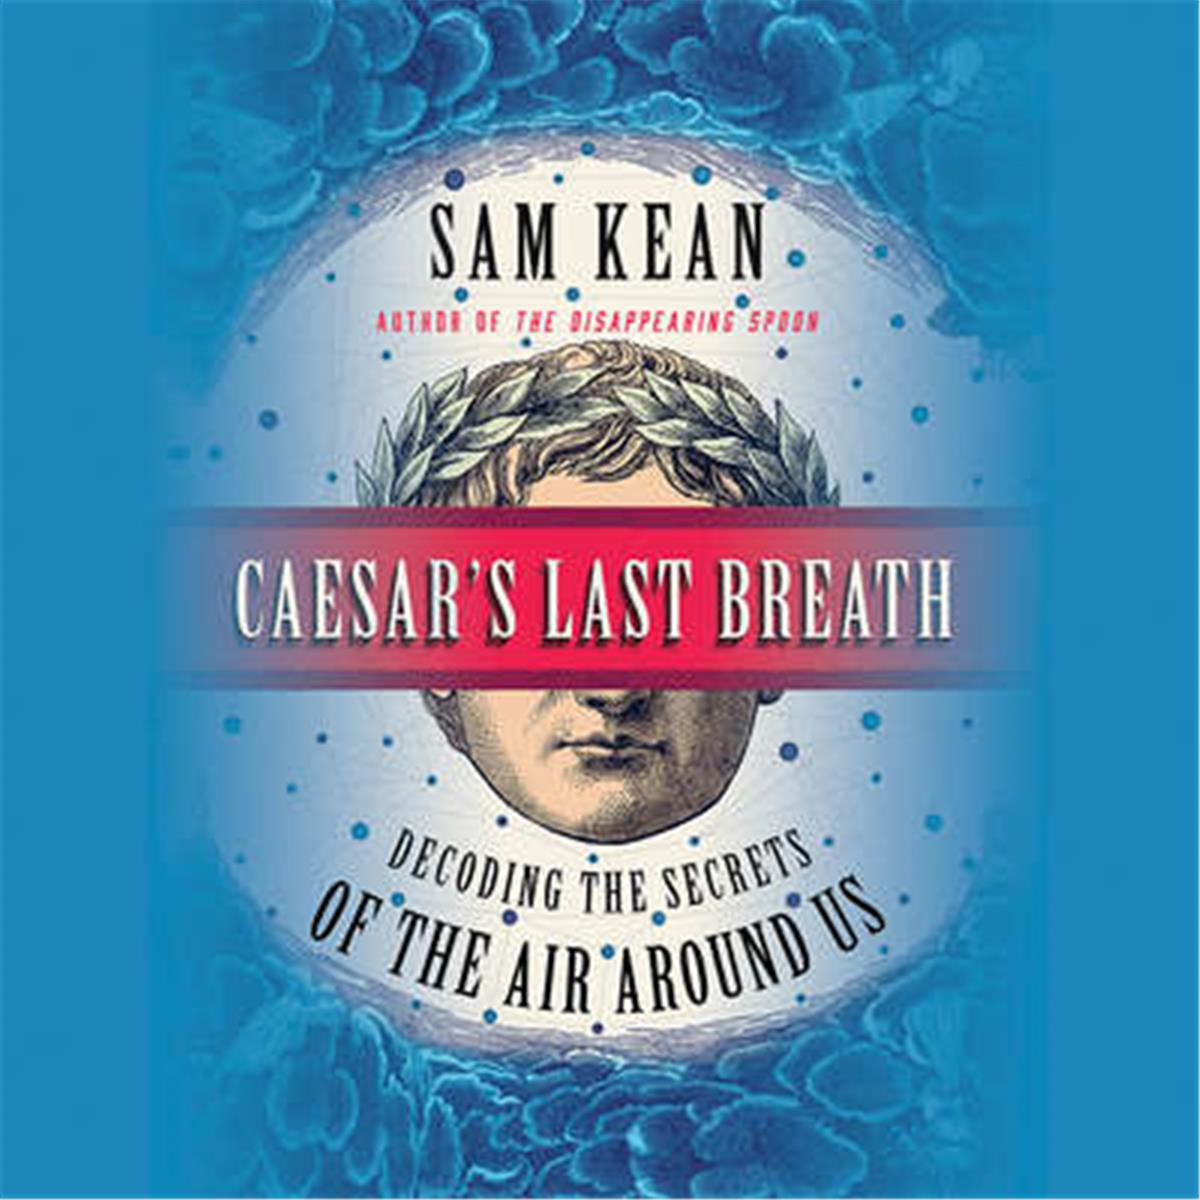 9781478950523 Caesars Last Breath - Decoding The Secrets Of The Air Around Us Audio Book